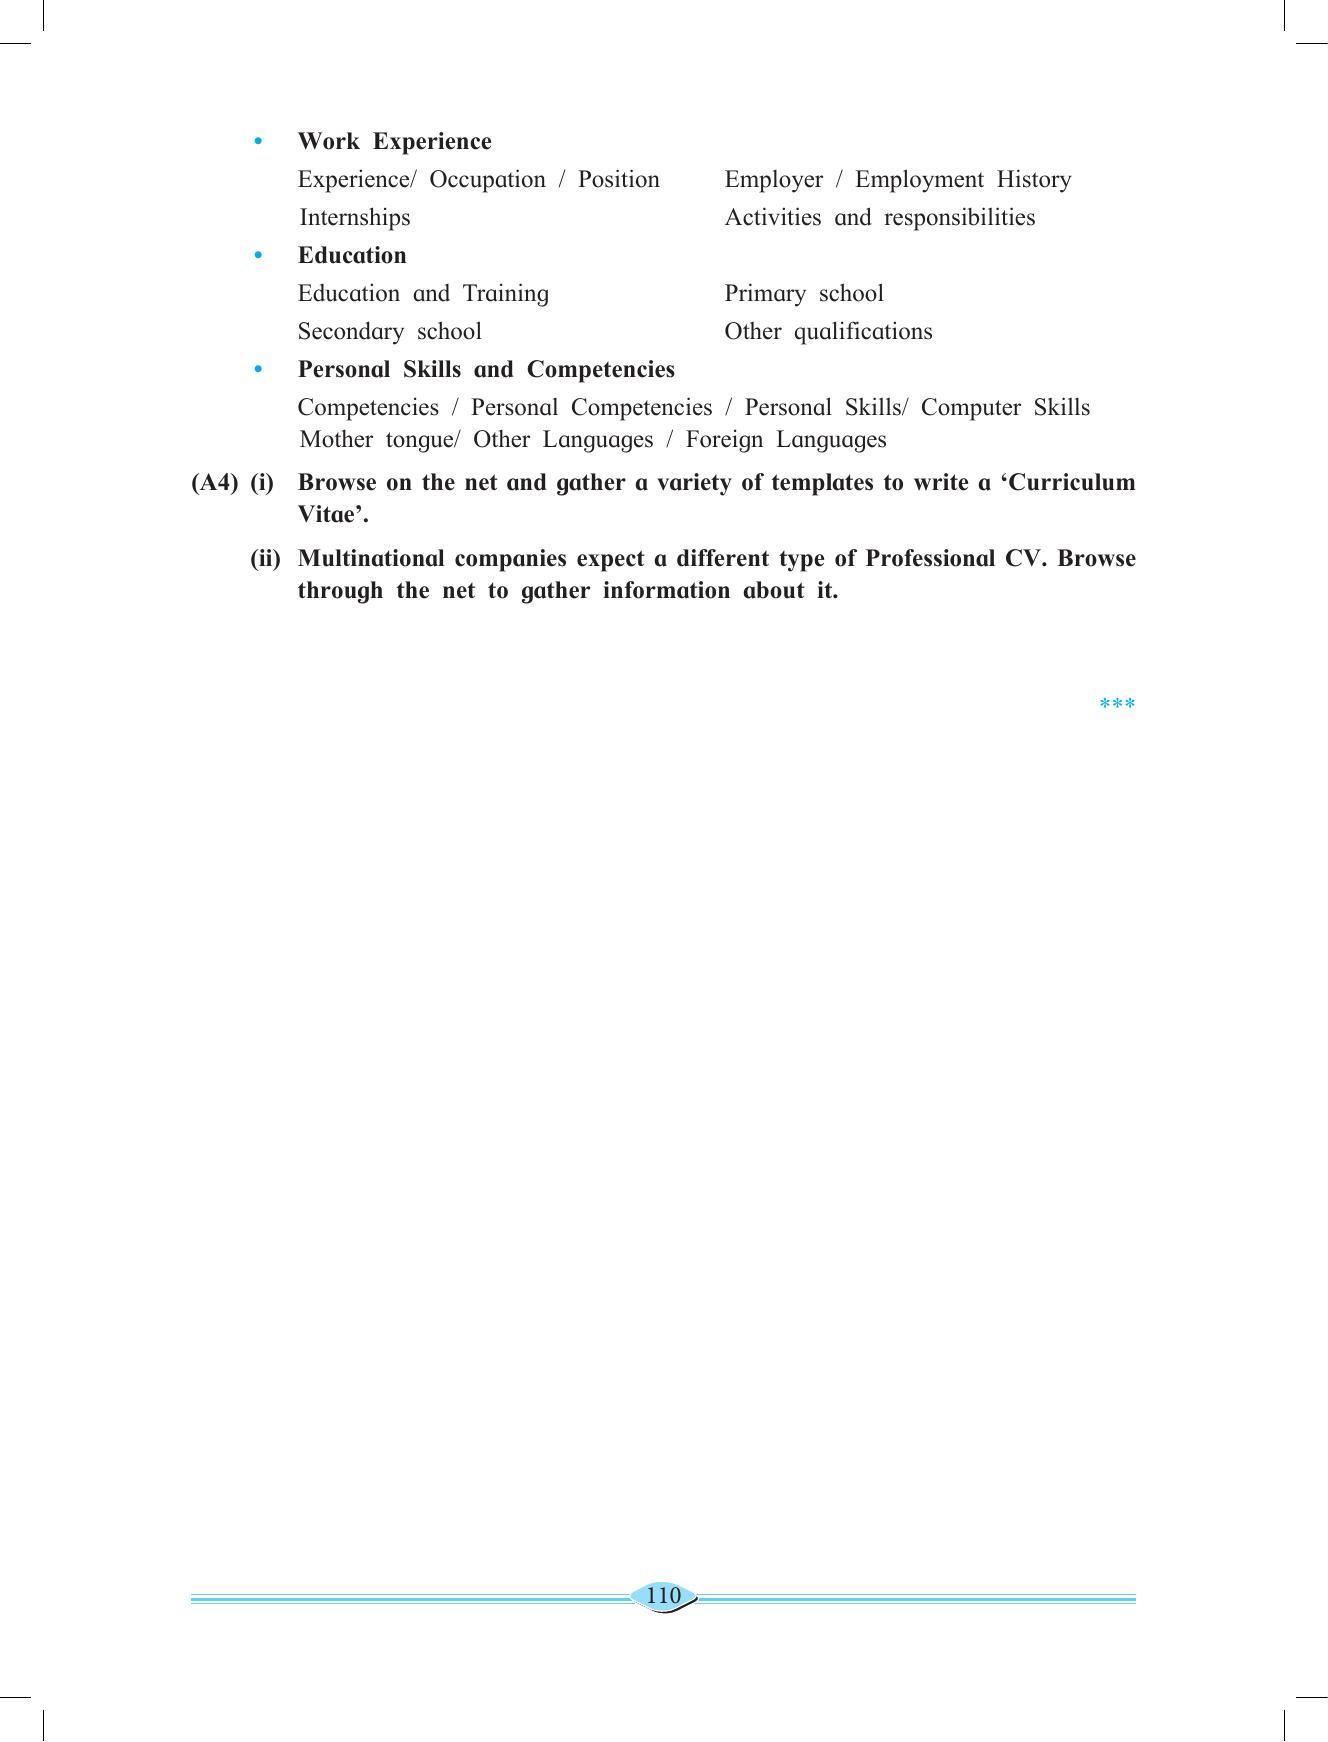 Maharashtra Board Class 11 English Textbook - Page 124